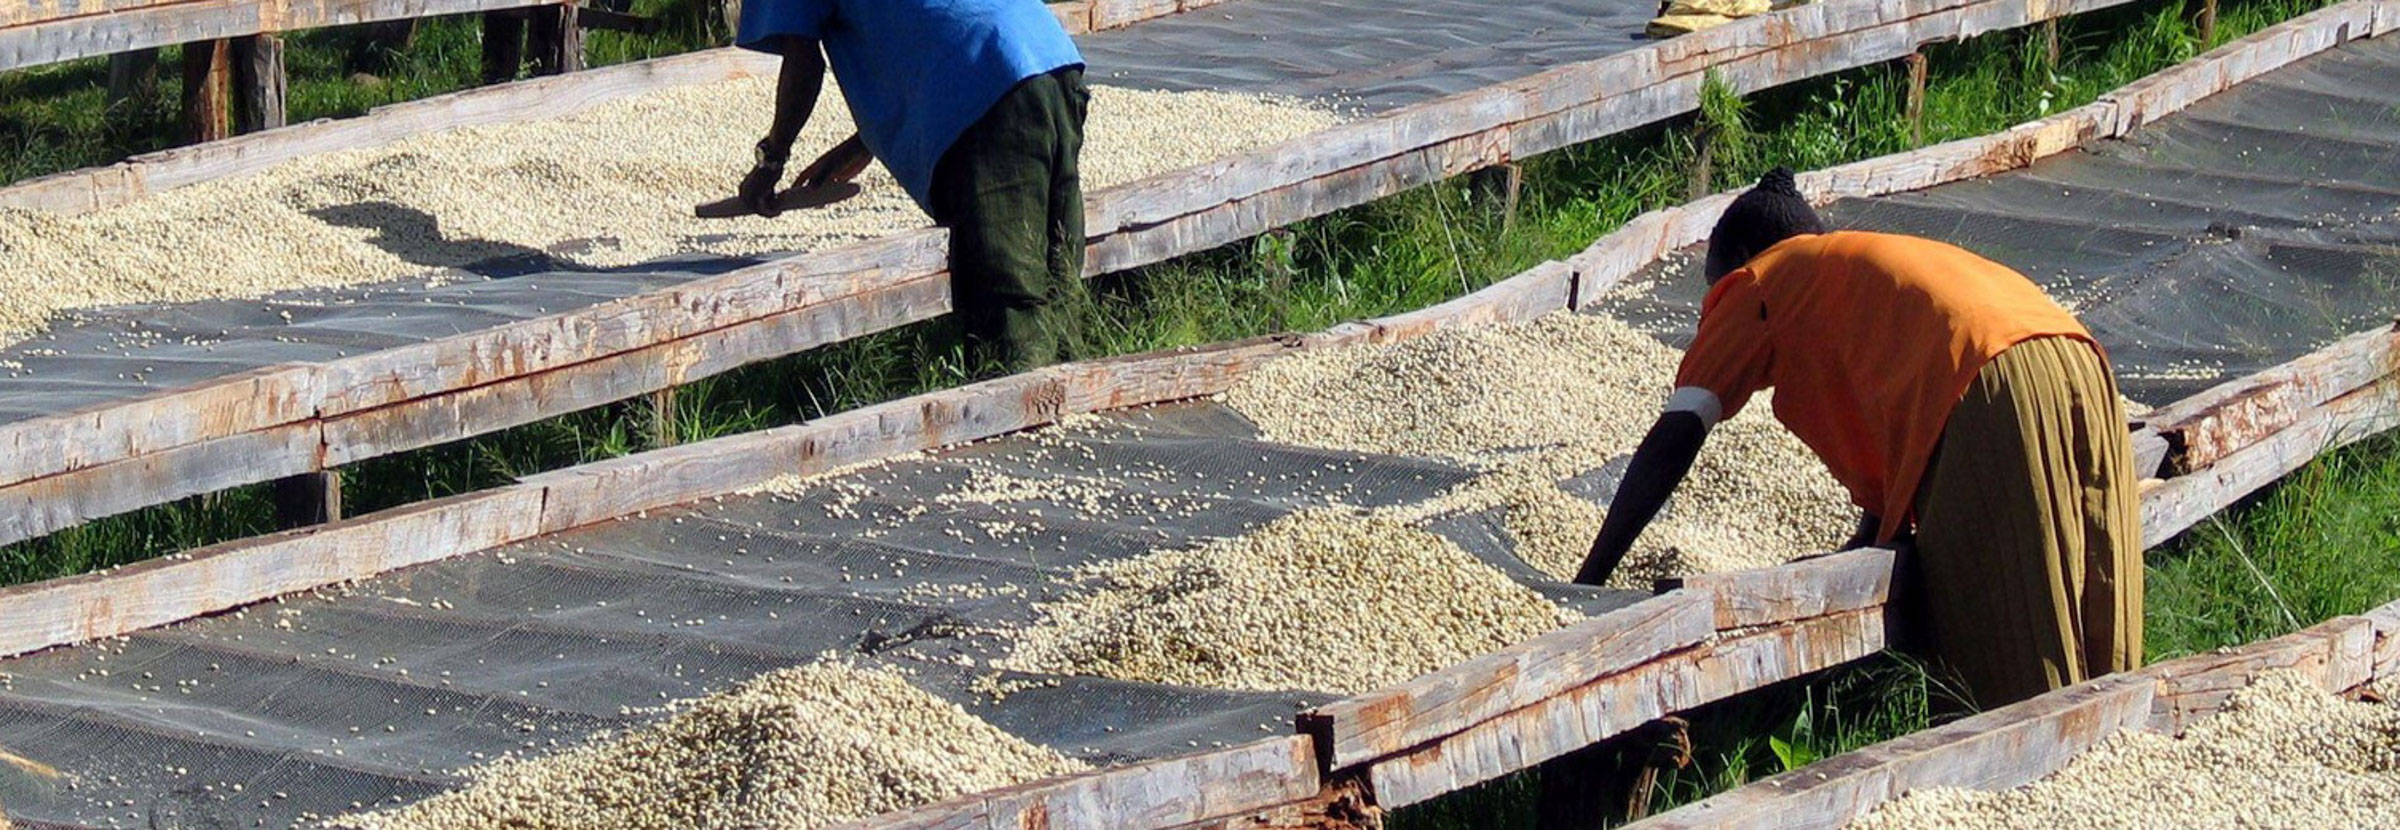 Coffee farm workers spread green coffee across raised beds.